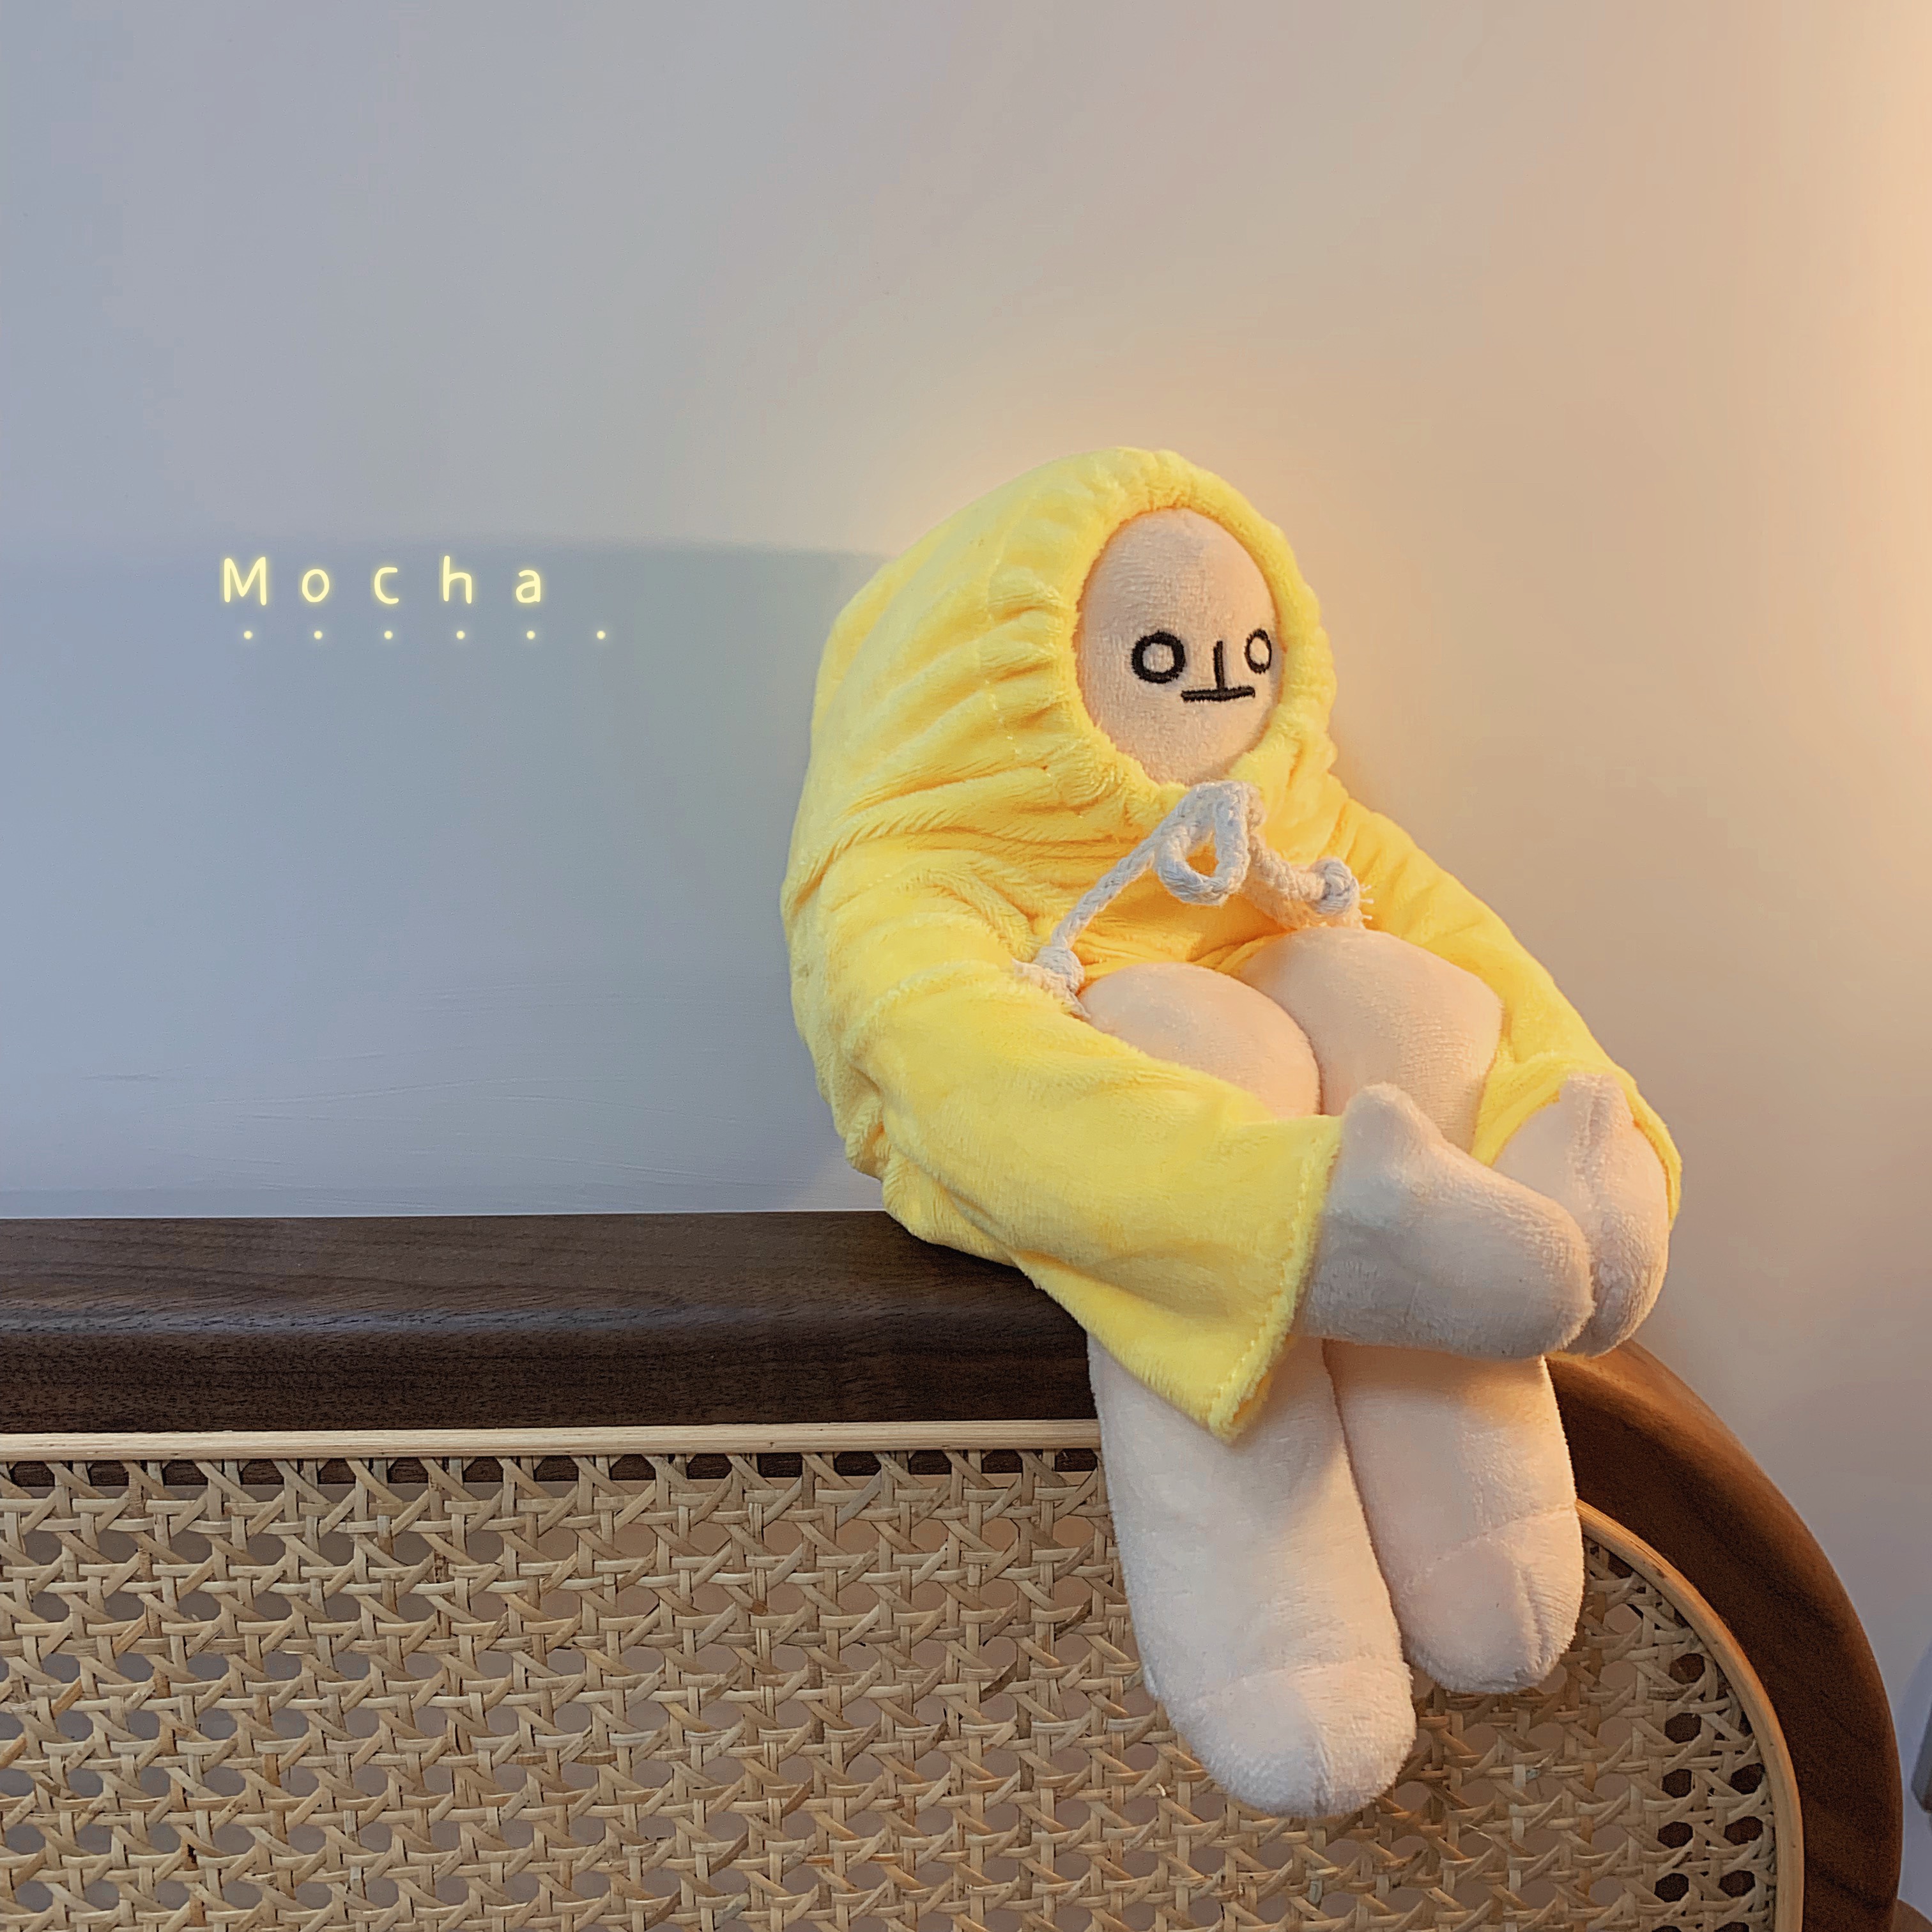 insสีแดงสุทธิเกาหลีกล้วยตุ๊กตาของเล่นตุ๊กตาหมอนเครื่องประดับชุดตุ๊กตาตุ๊กตาวันเกิดเพศหญิงในปัจจุบัน